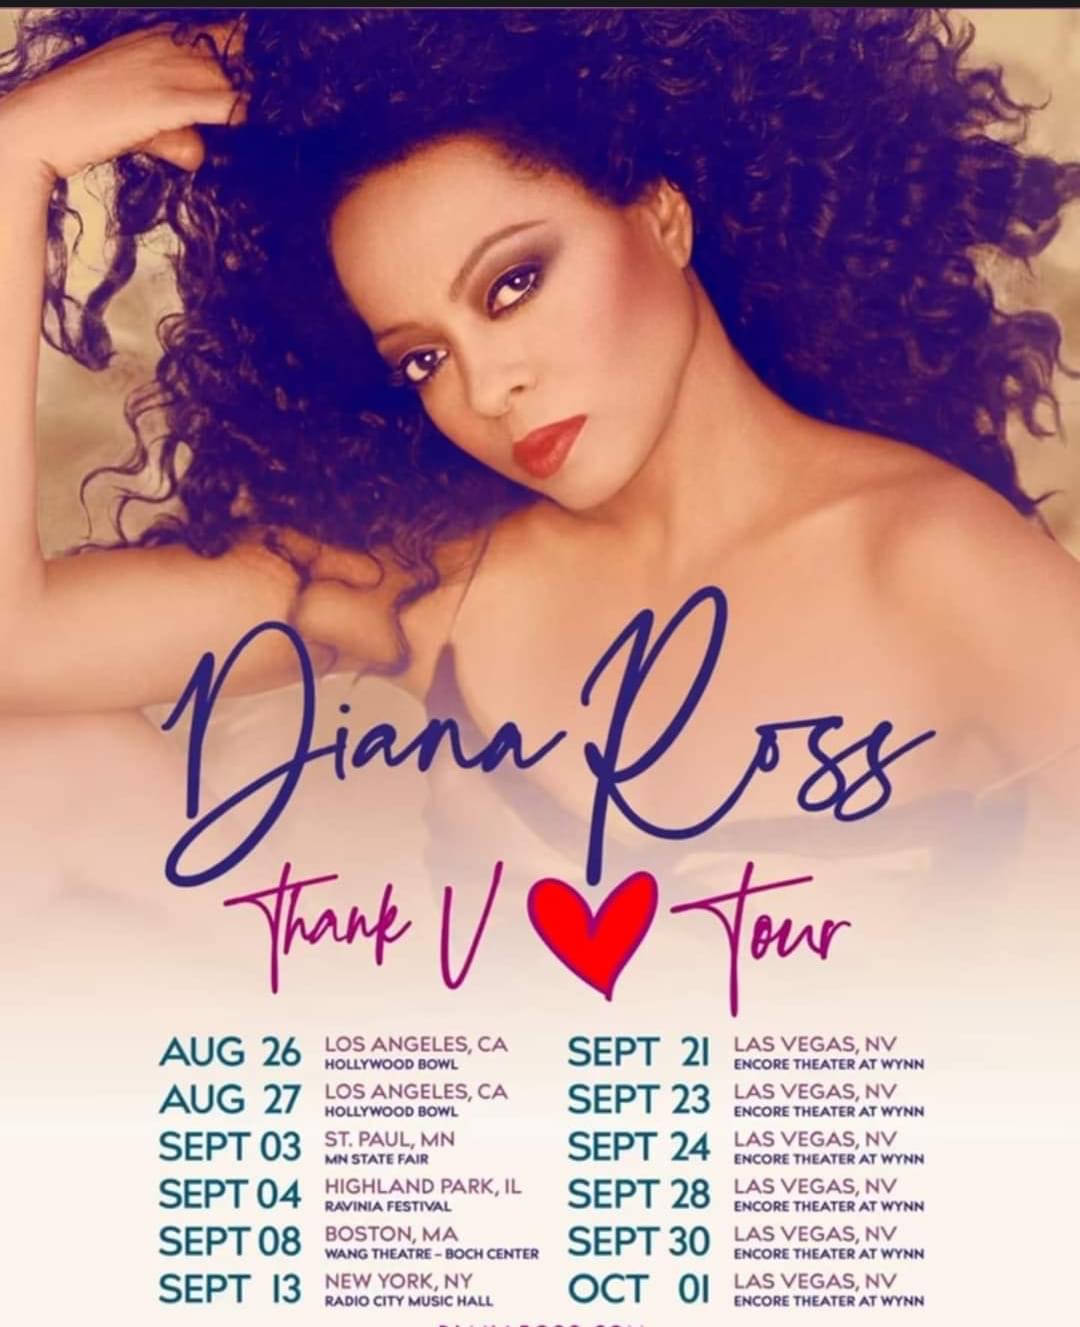 Diana Ross at Encore Theater at Wynn Las Vegas on Sat, Oct 1st, 2022 - 8:00 pm